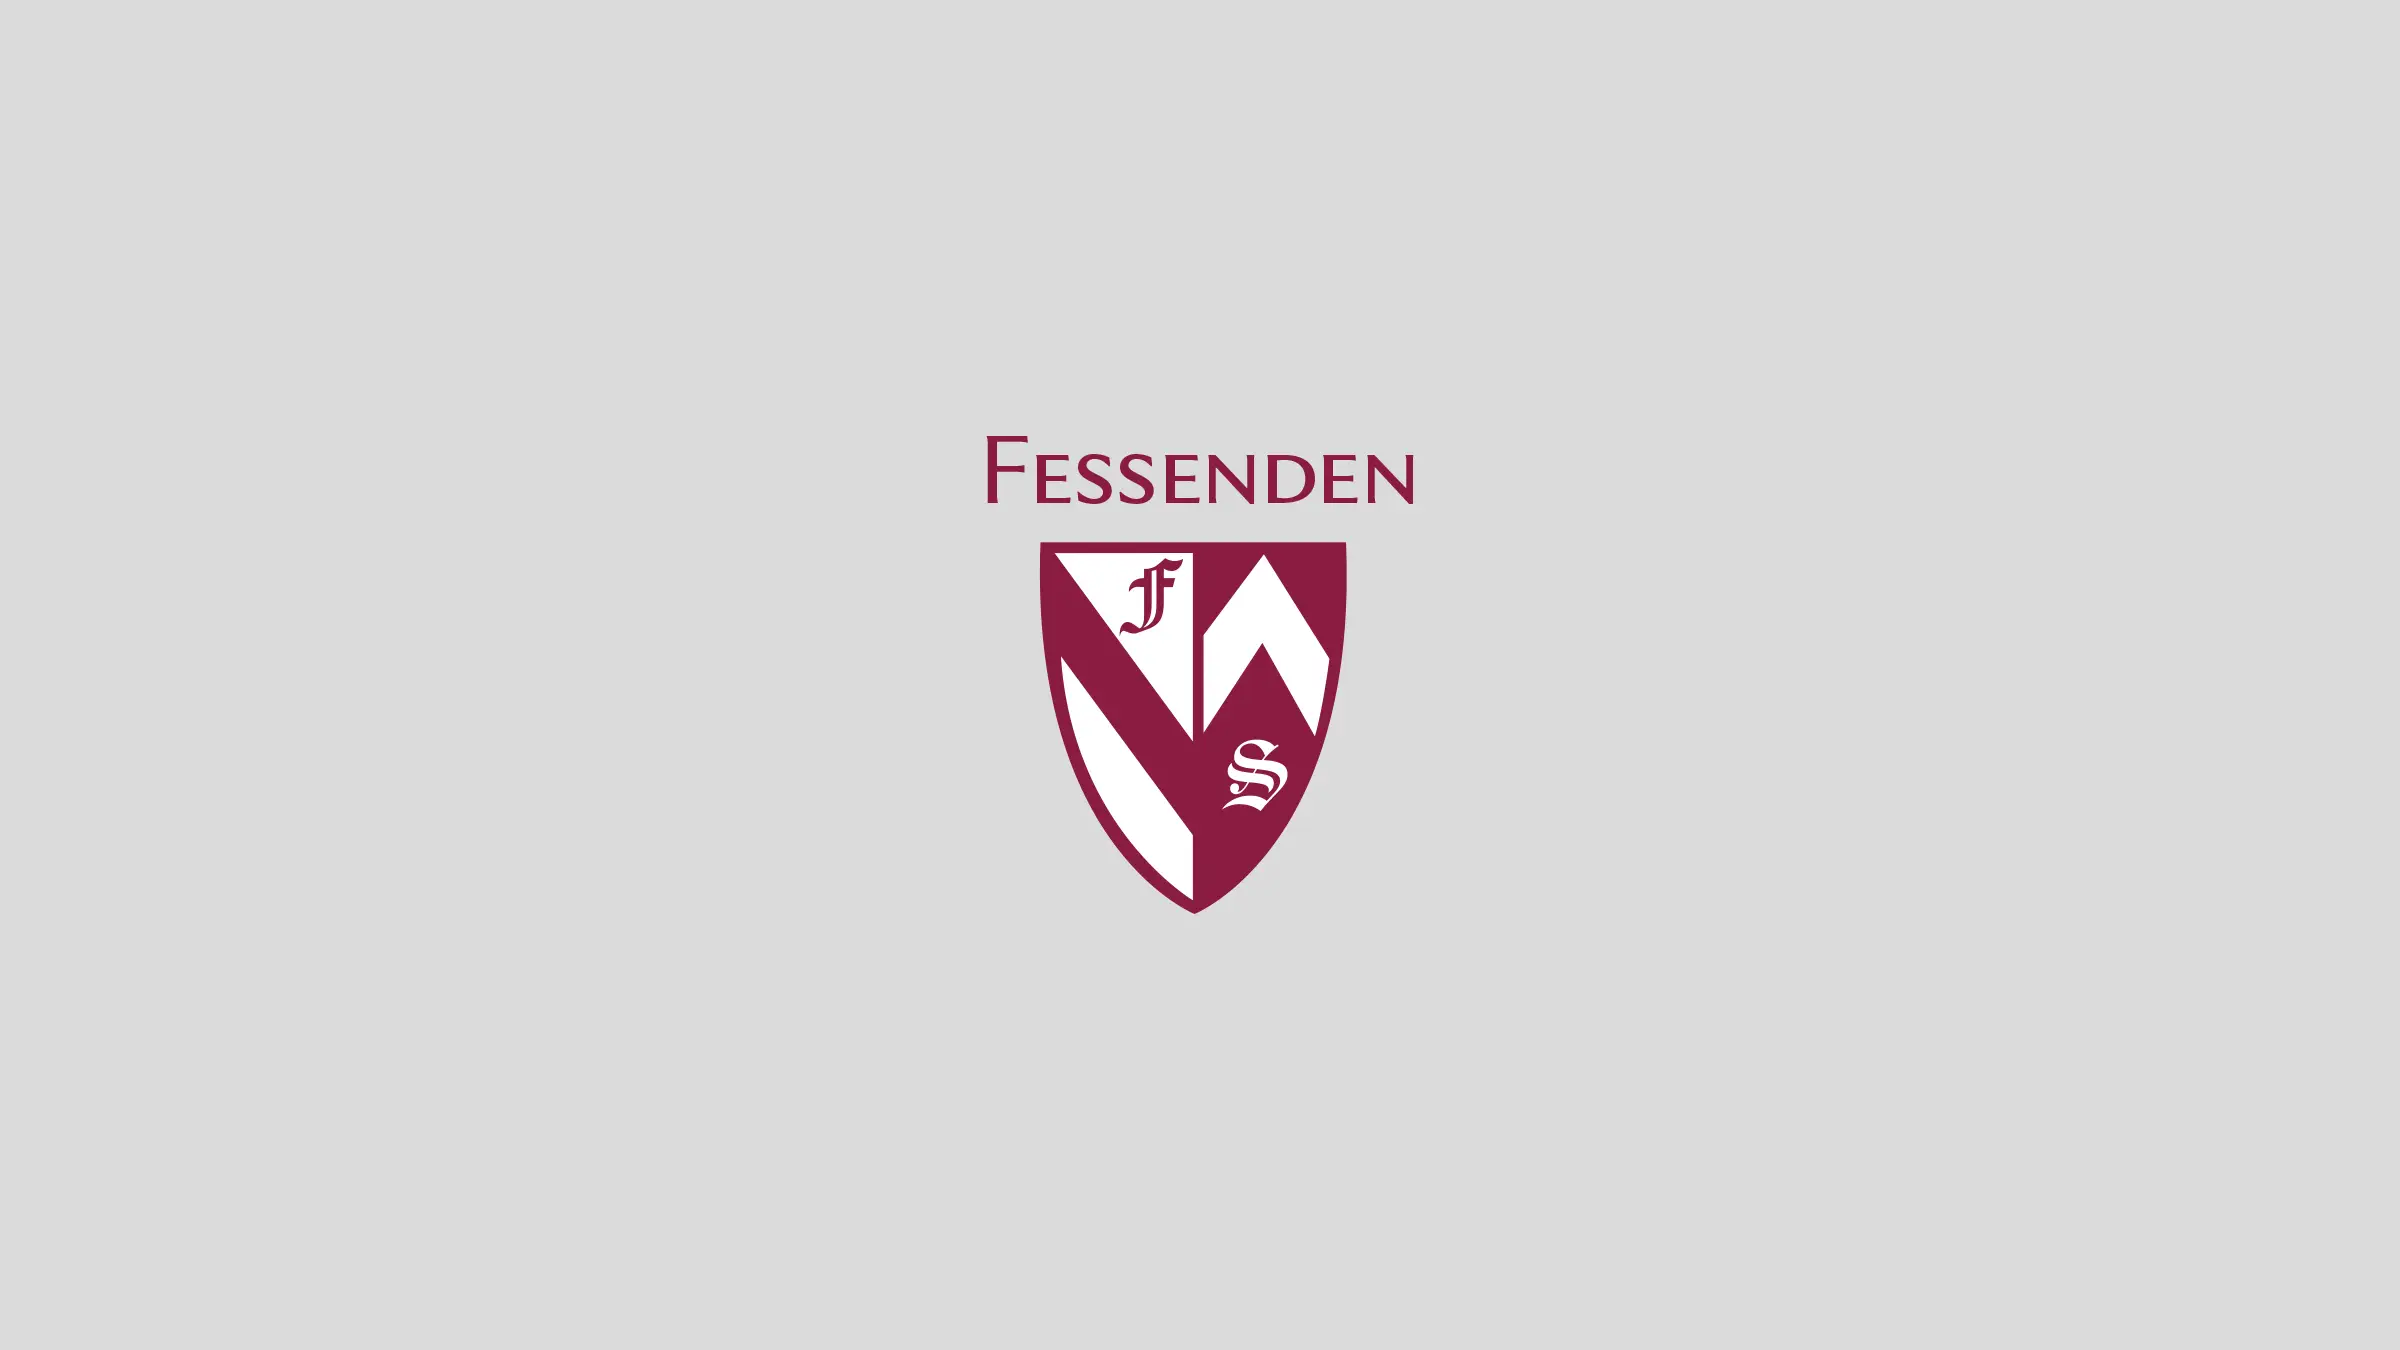 Fessenden logo process, image 3